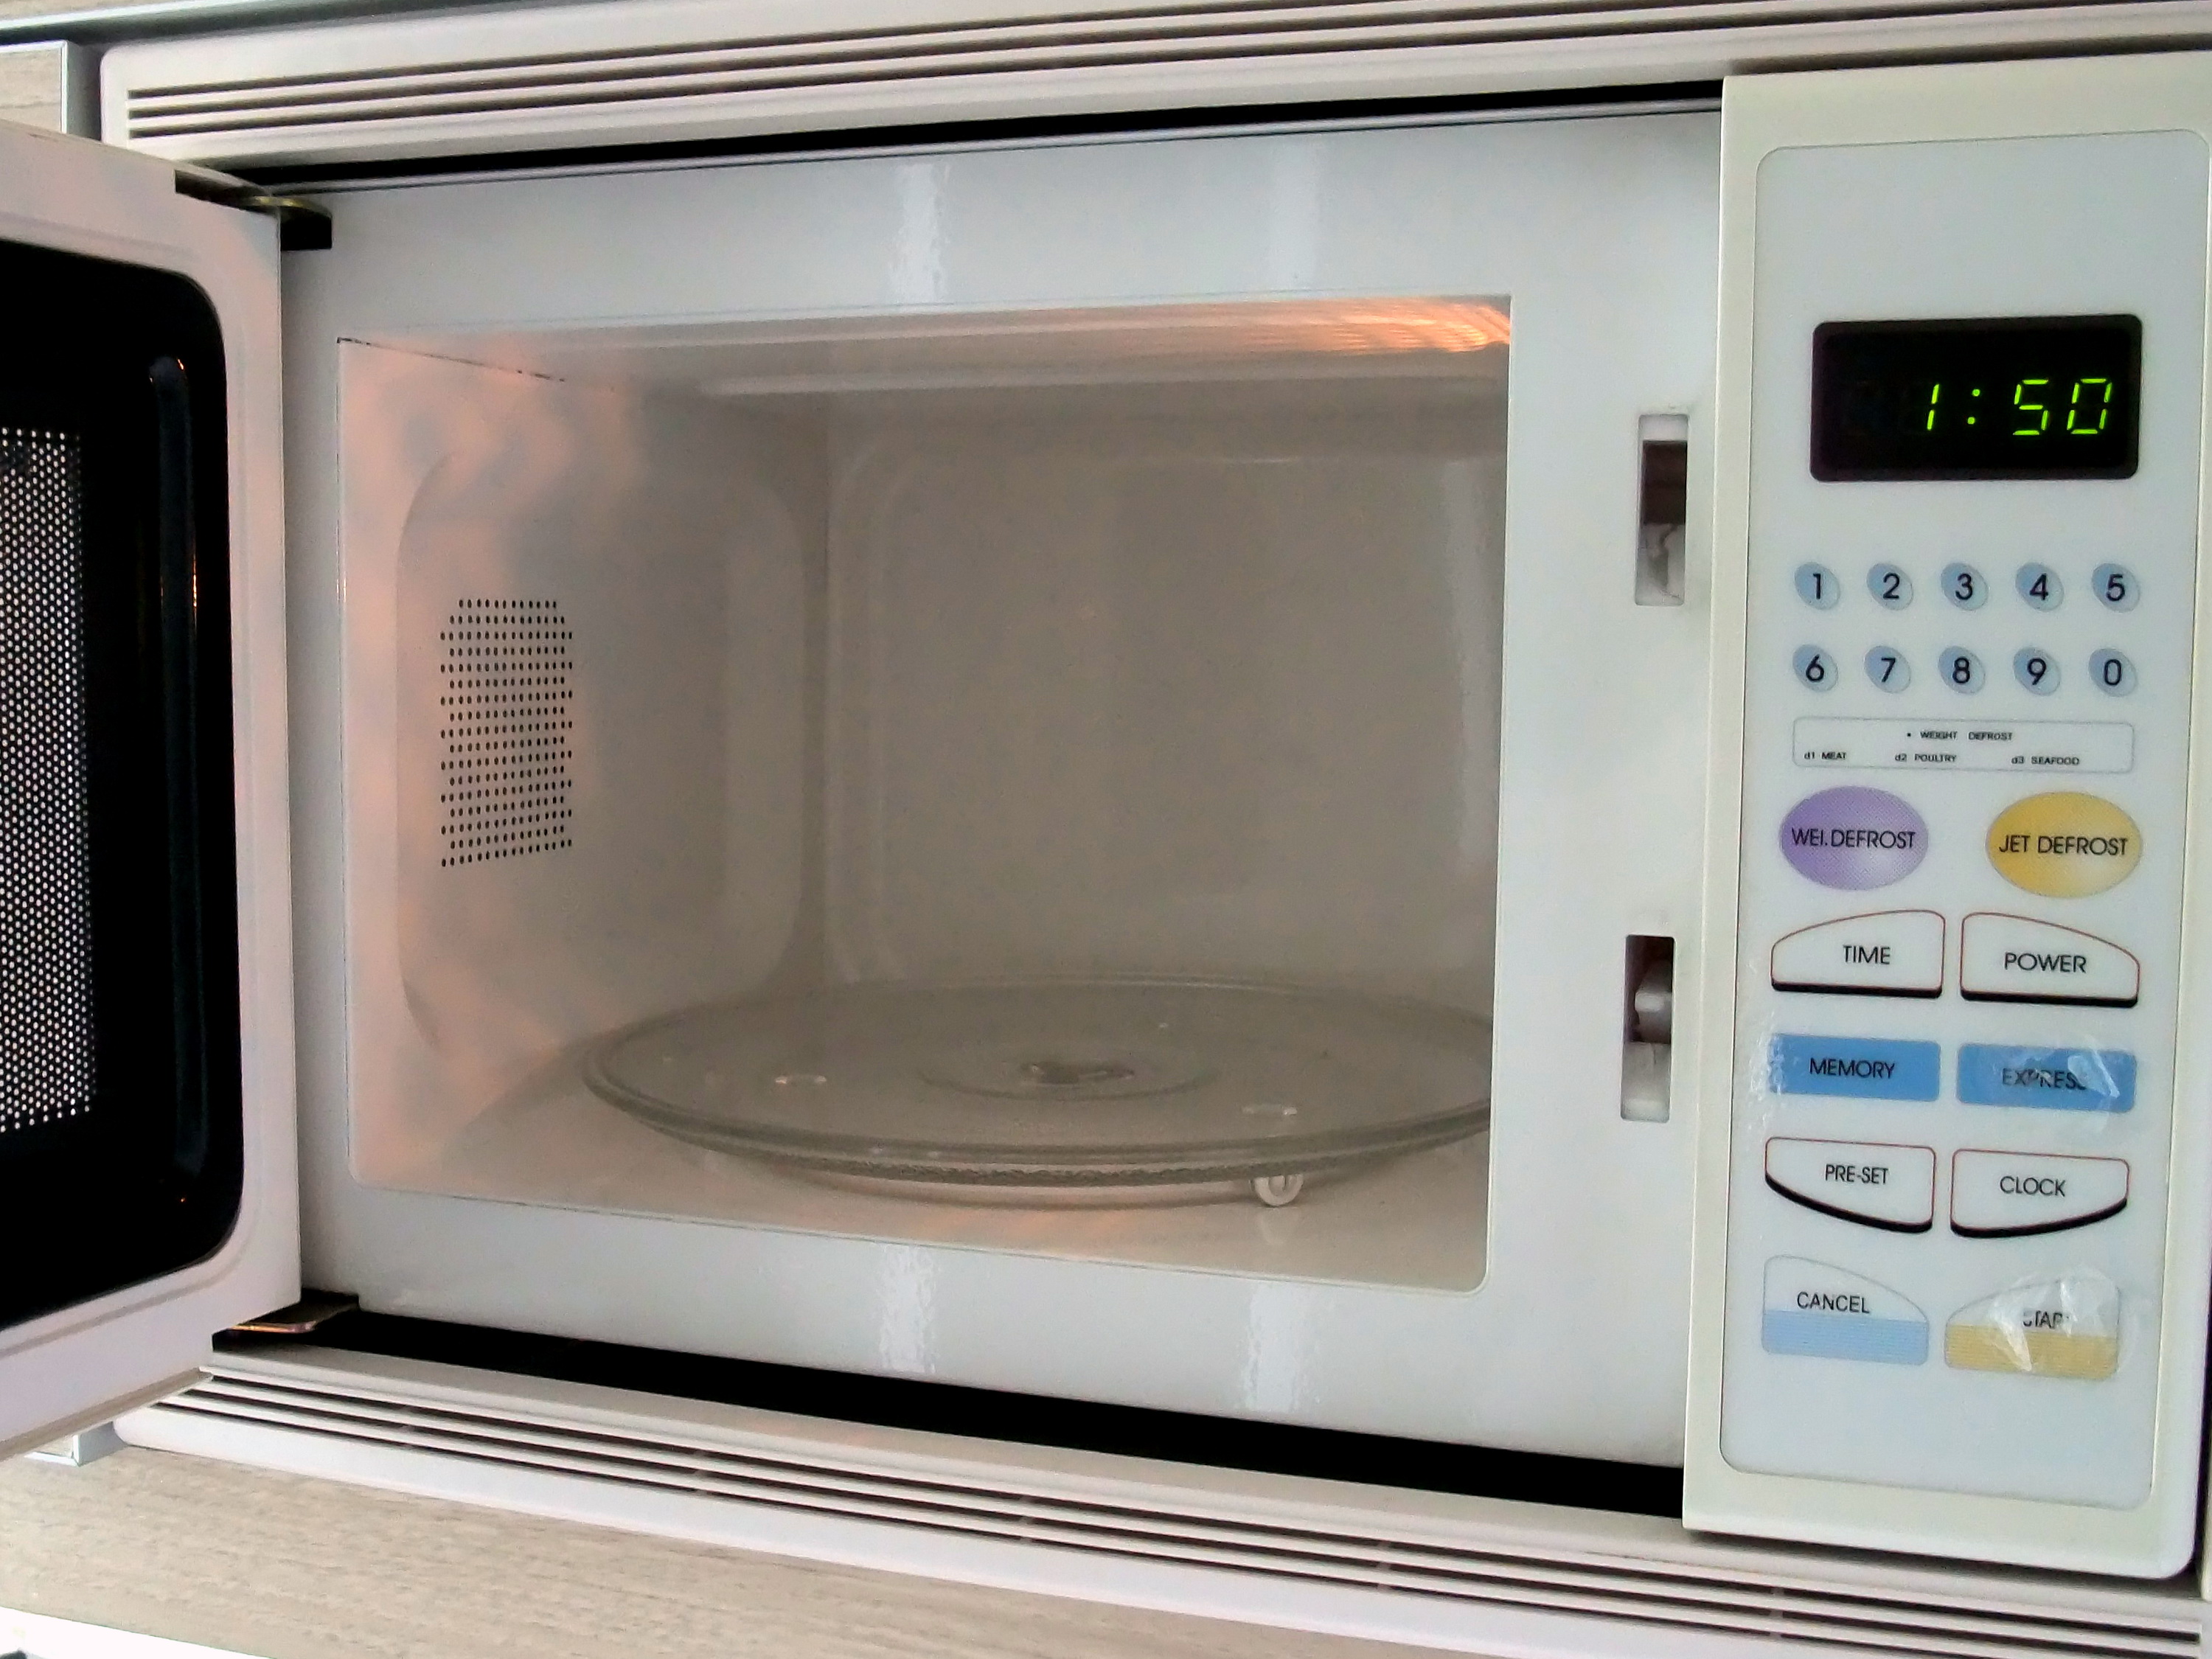 Microwave_oven_(interior)